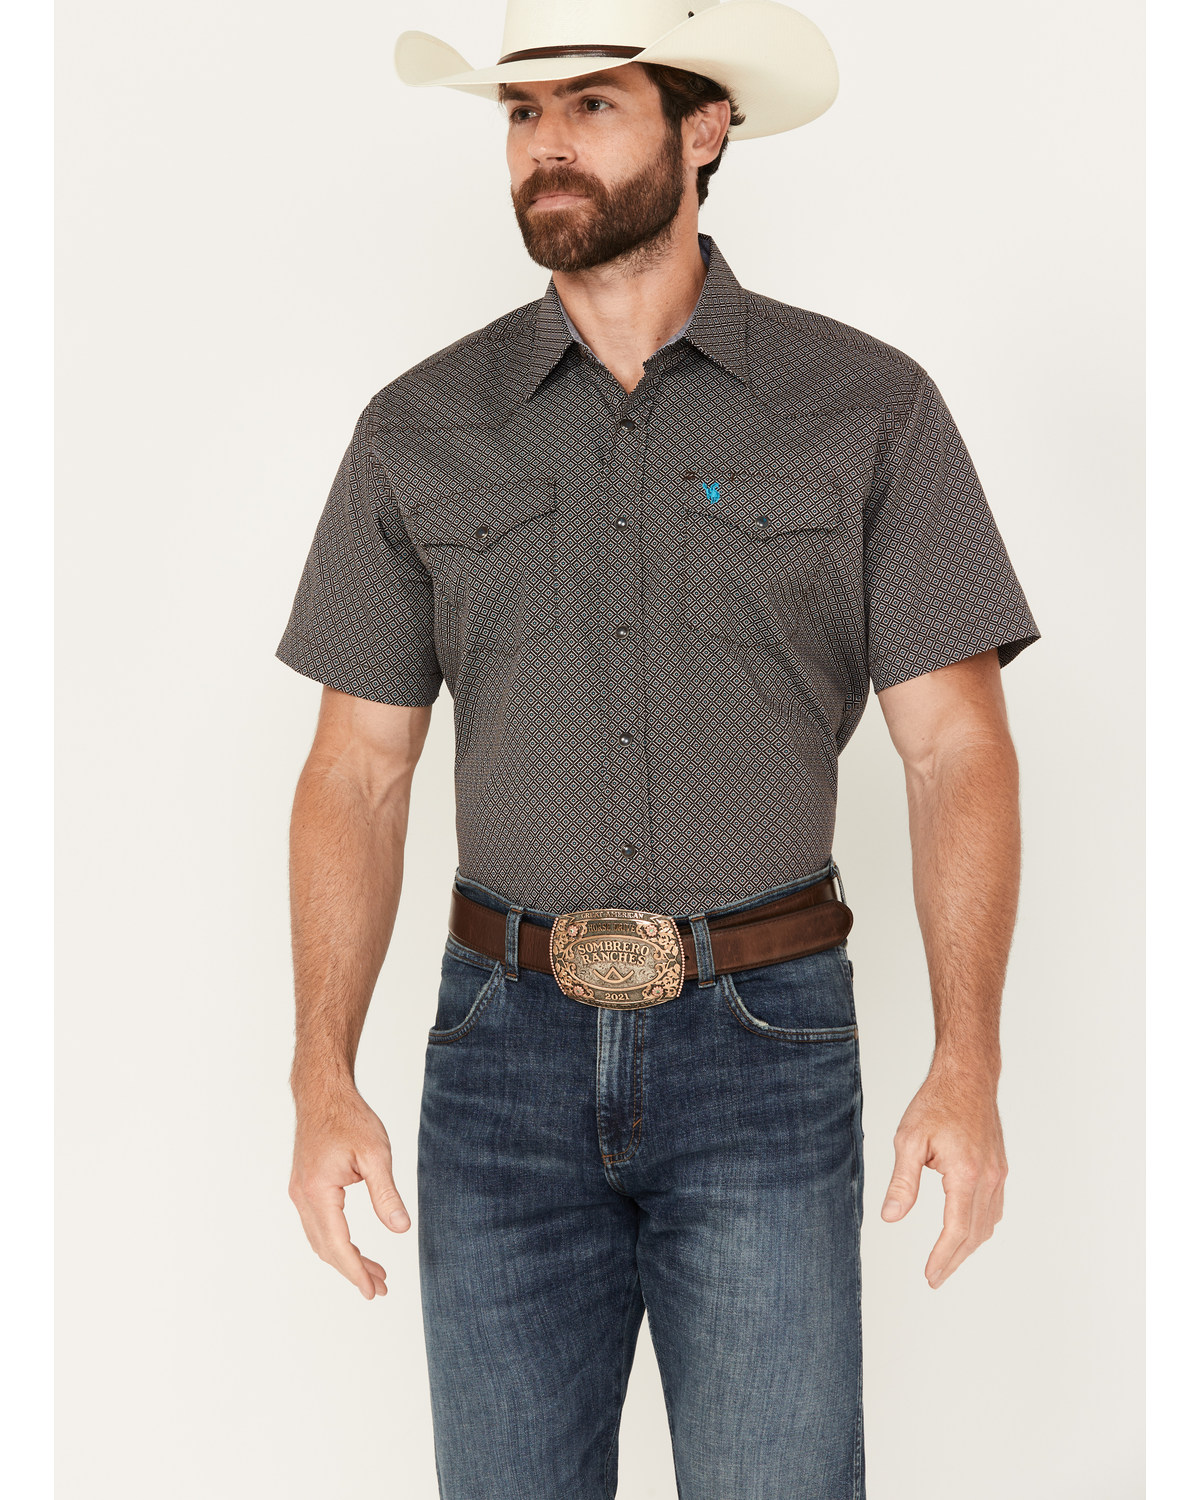 Rodeo Clothing Men's Printed Short Sleeve Snap Western Shirt